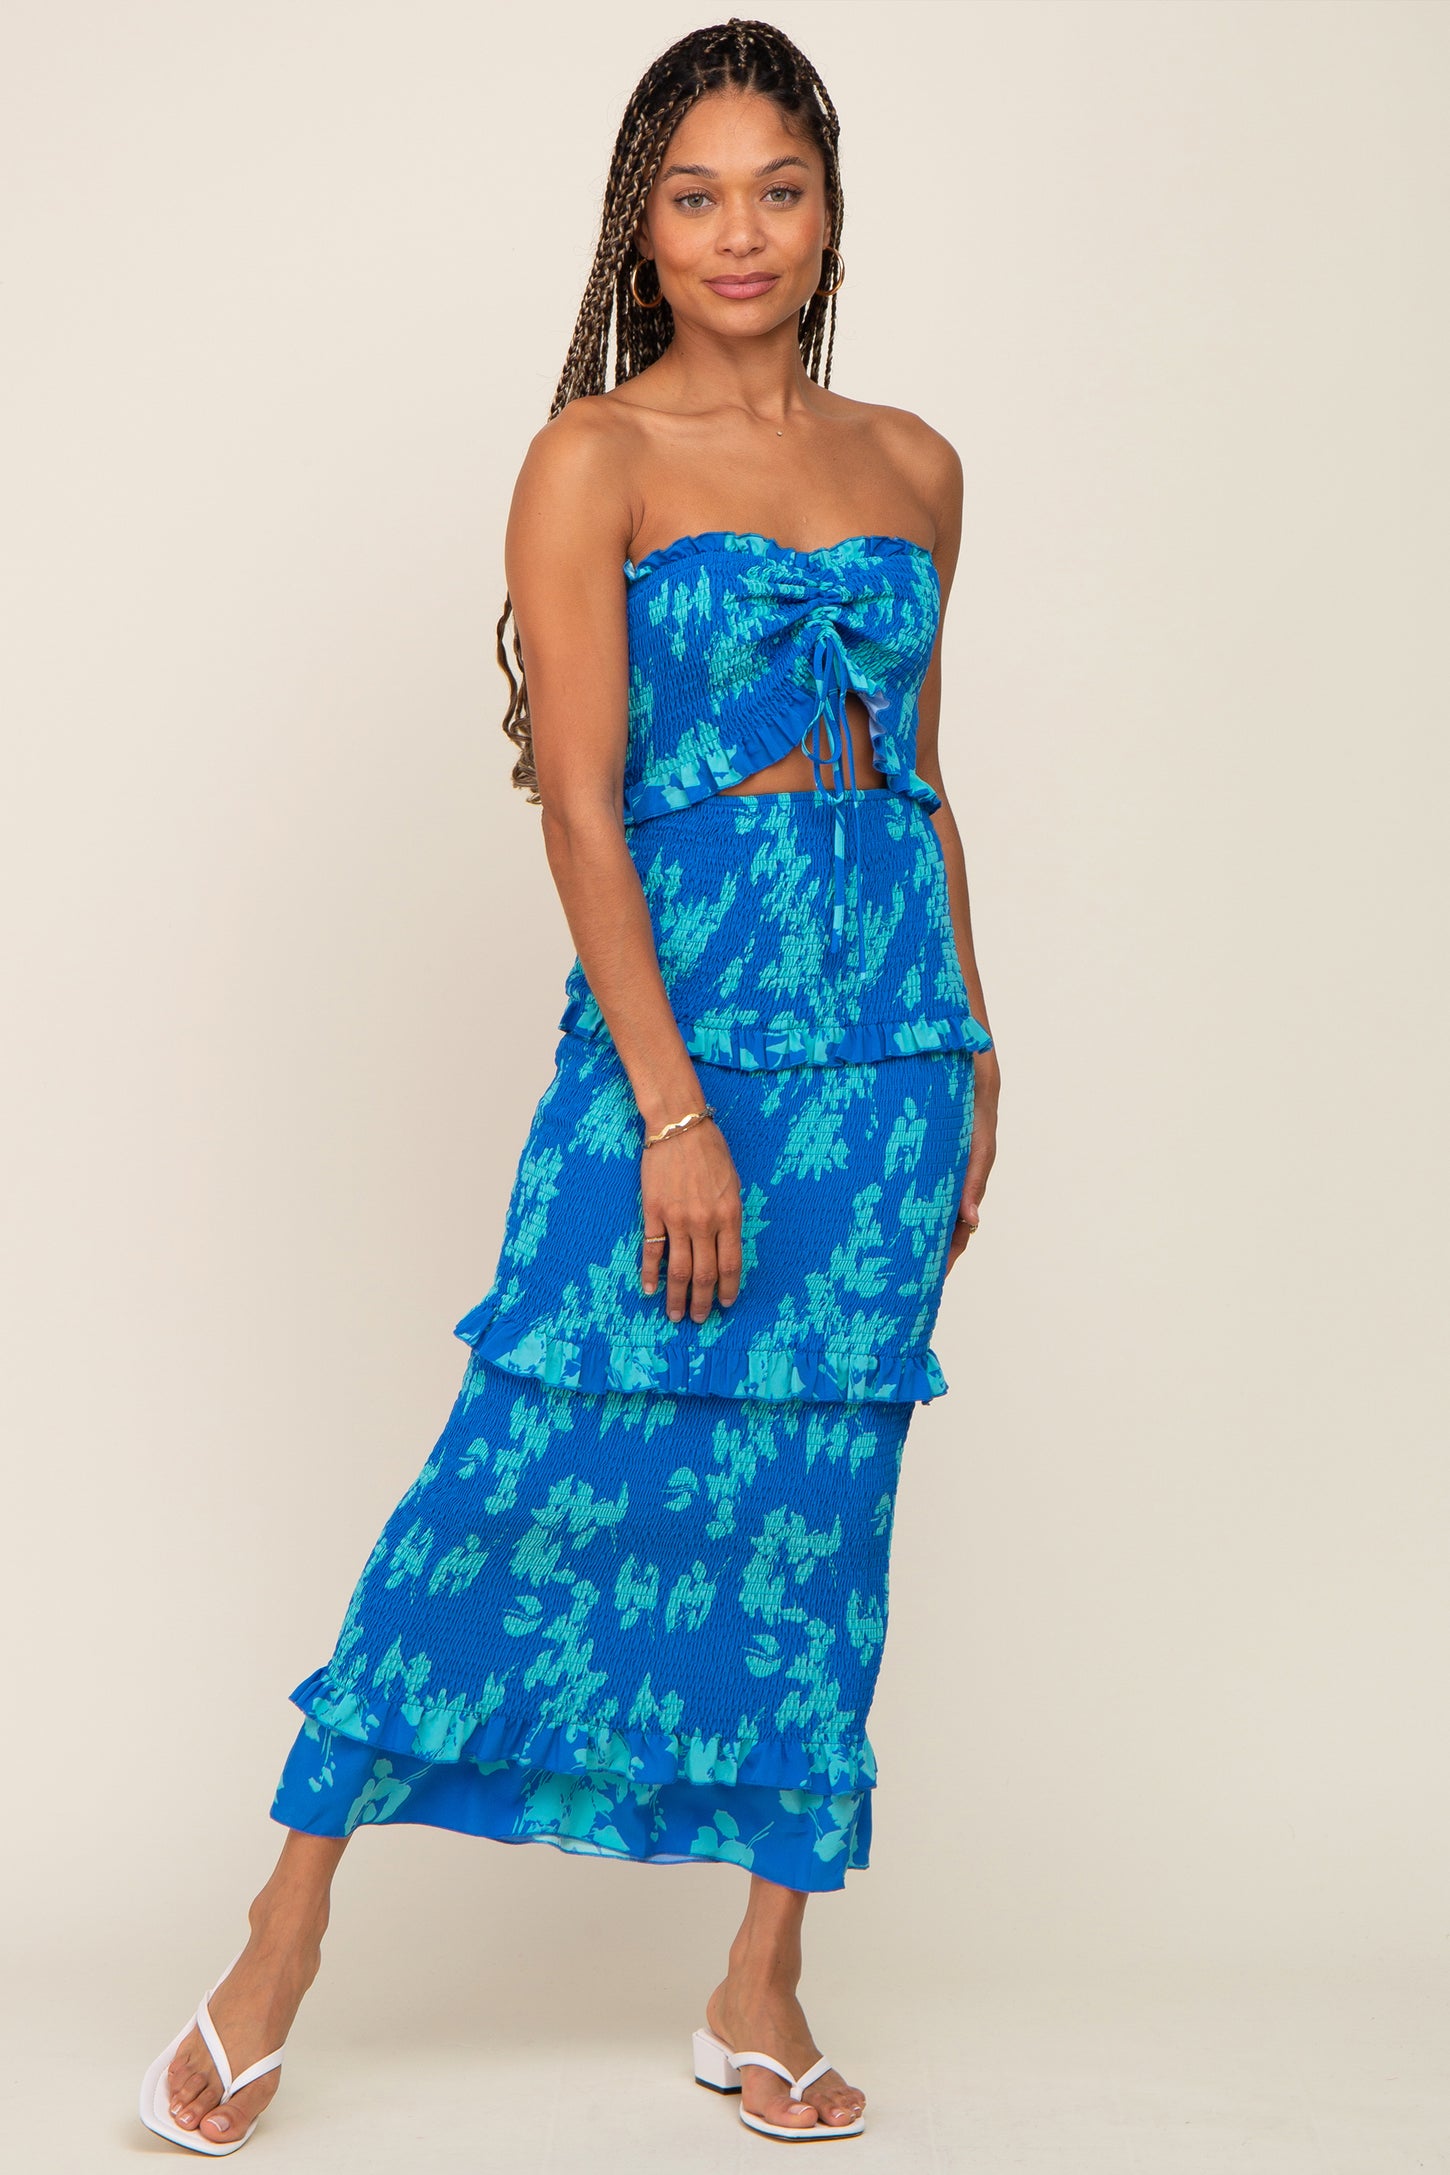 Blue Floral Smocked Drawstring Front Cutout Ruffle Trim Maternity Midi Dress